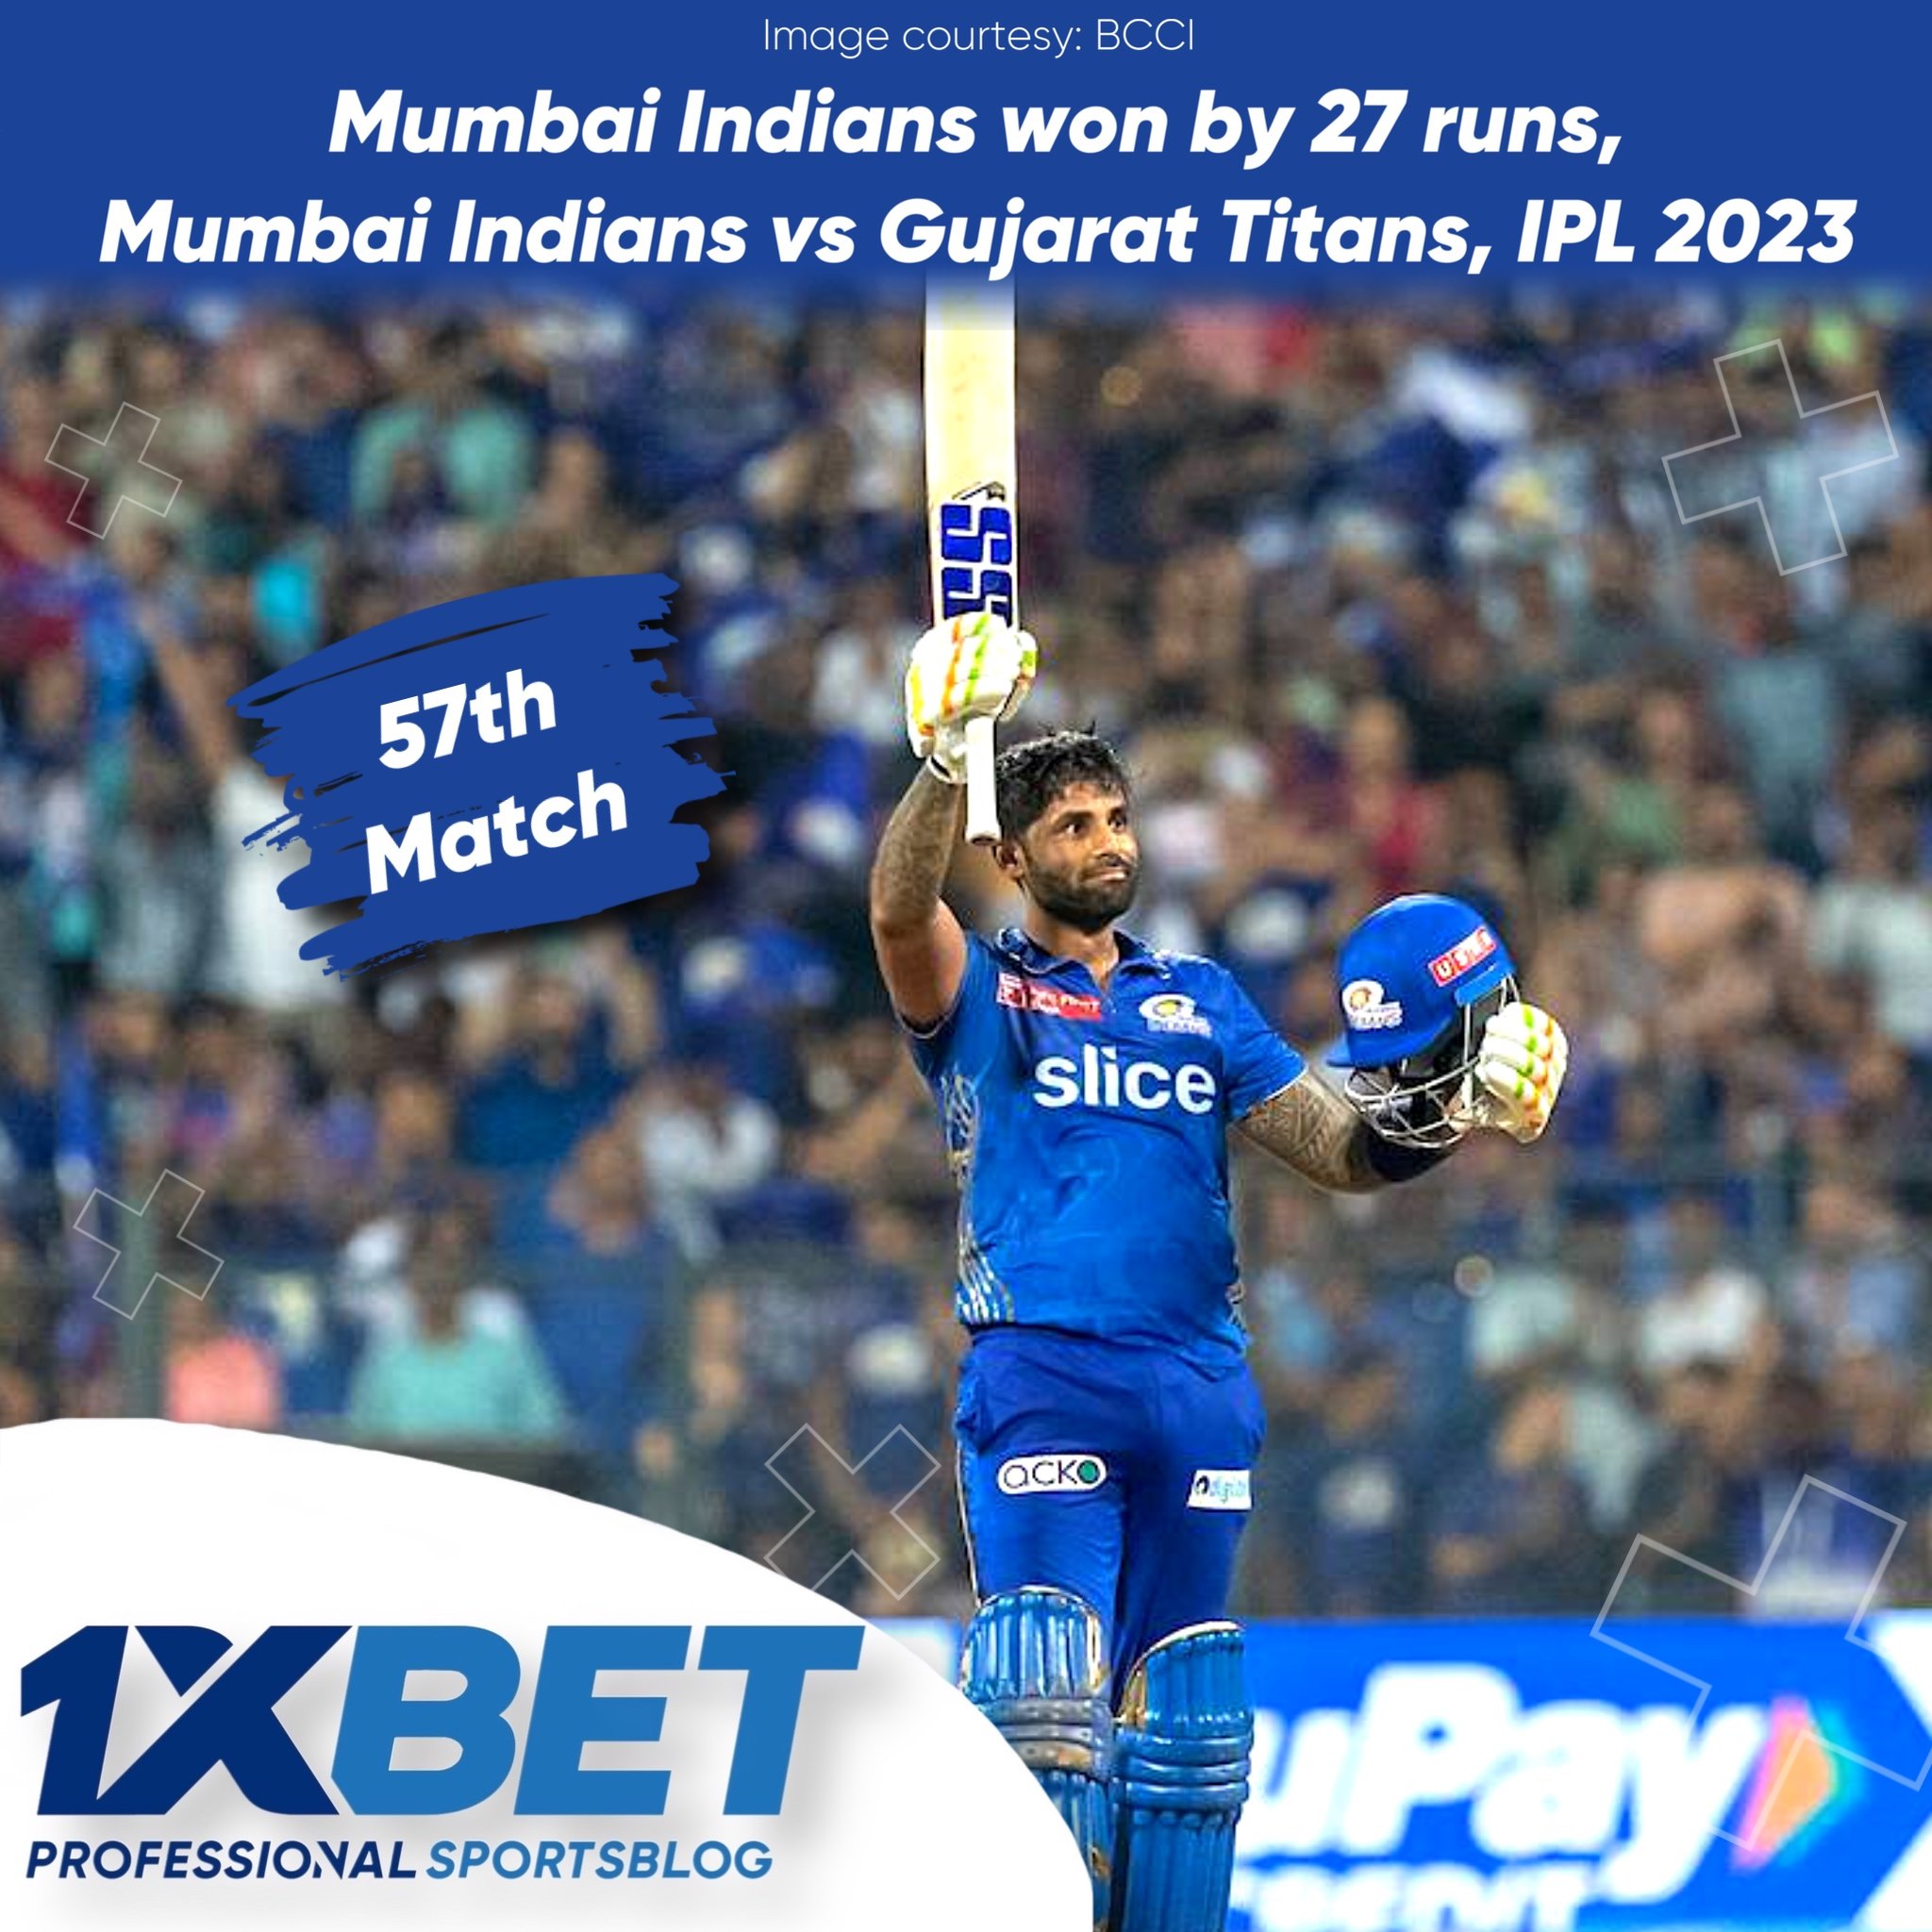 Mumbai Indians won by 27 runs